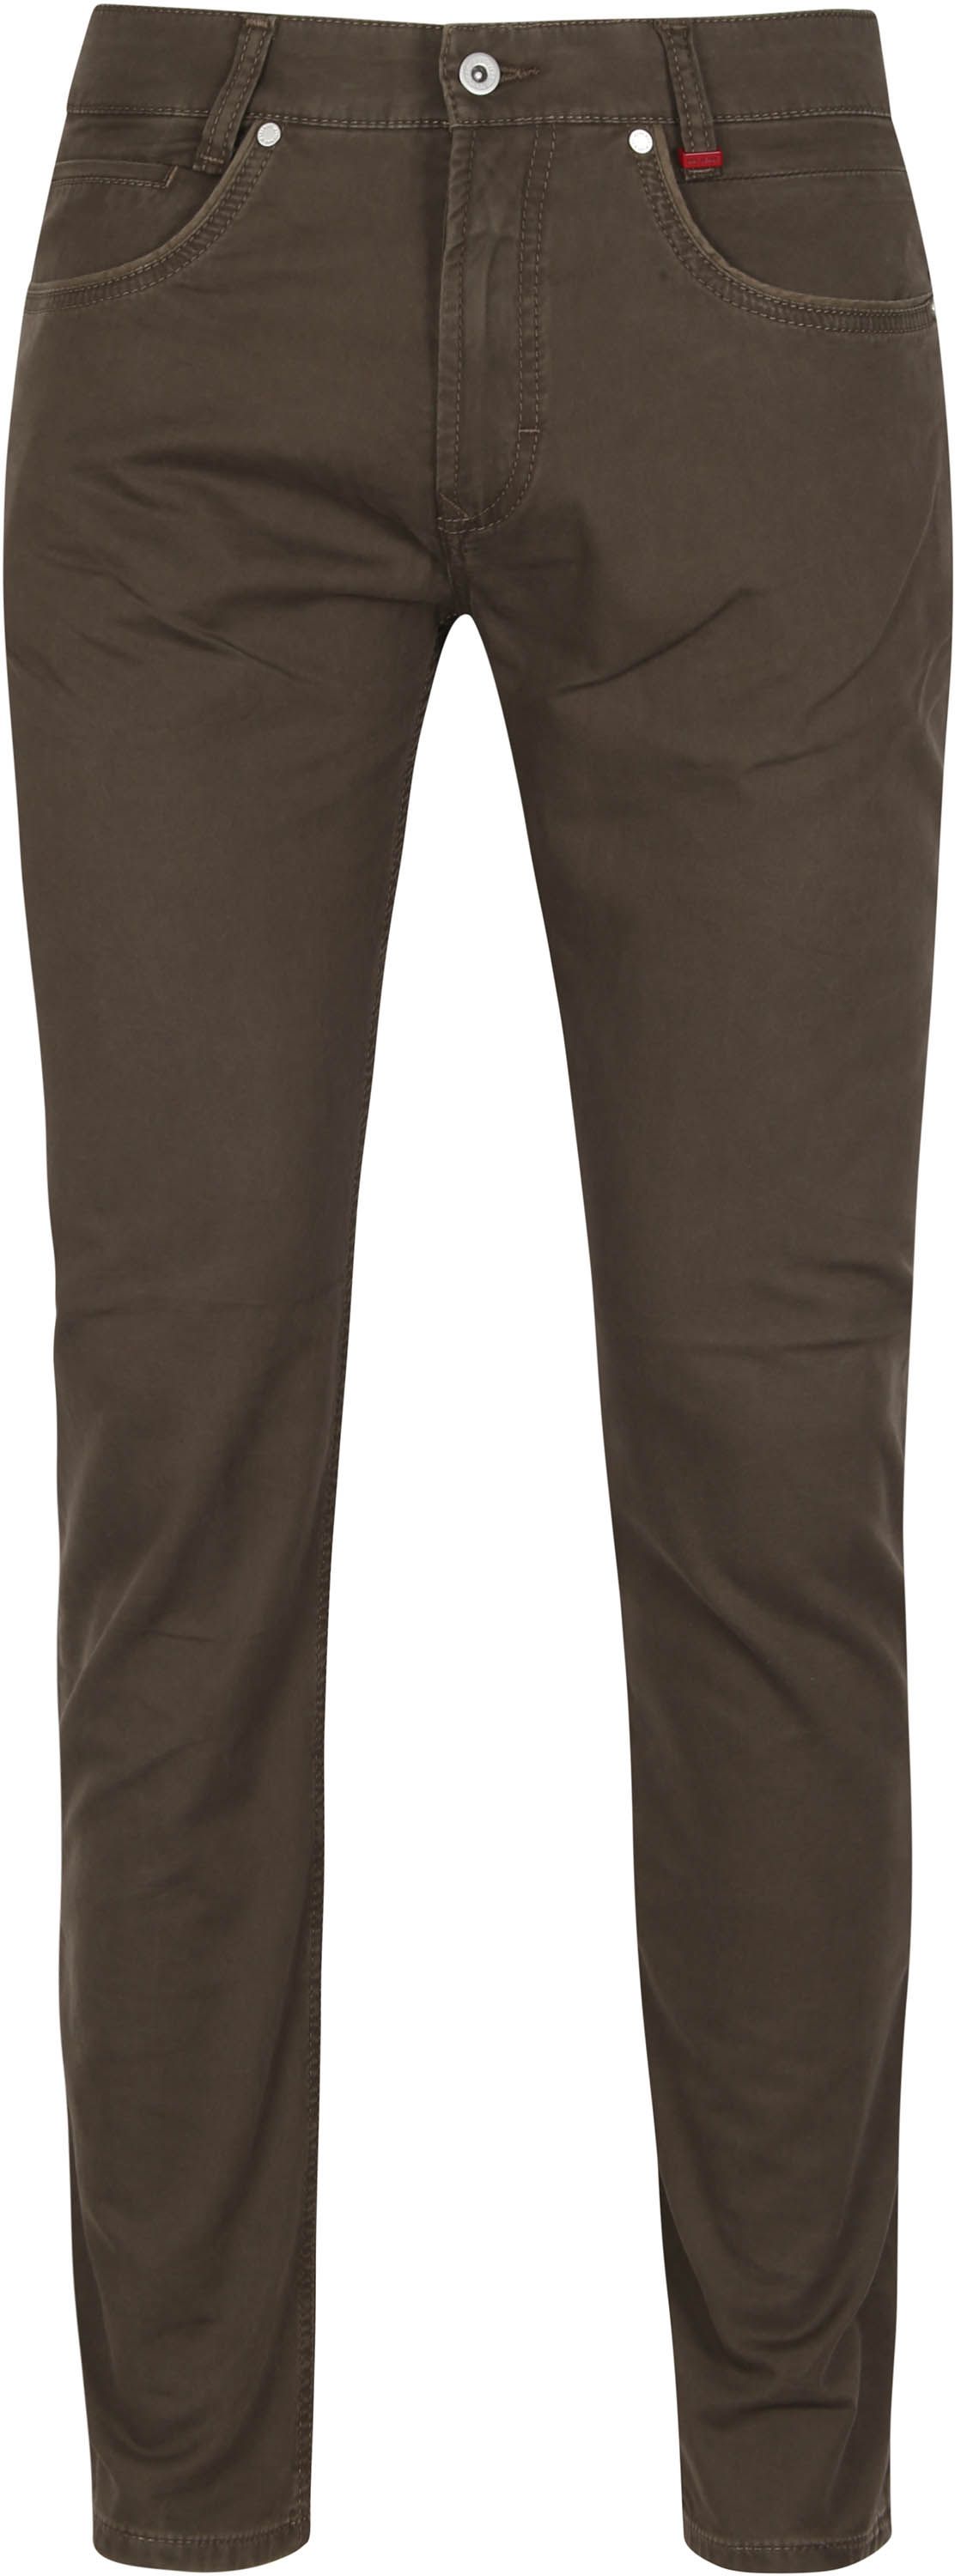 MAC Jeans Arne Pipe Two Tone Dark Brown size W 31